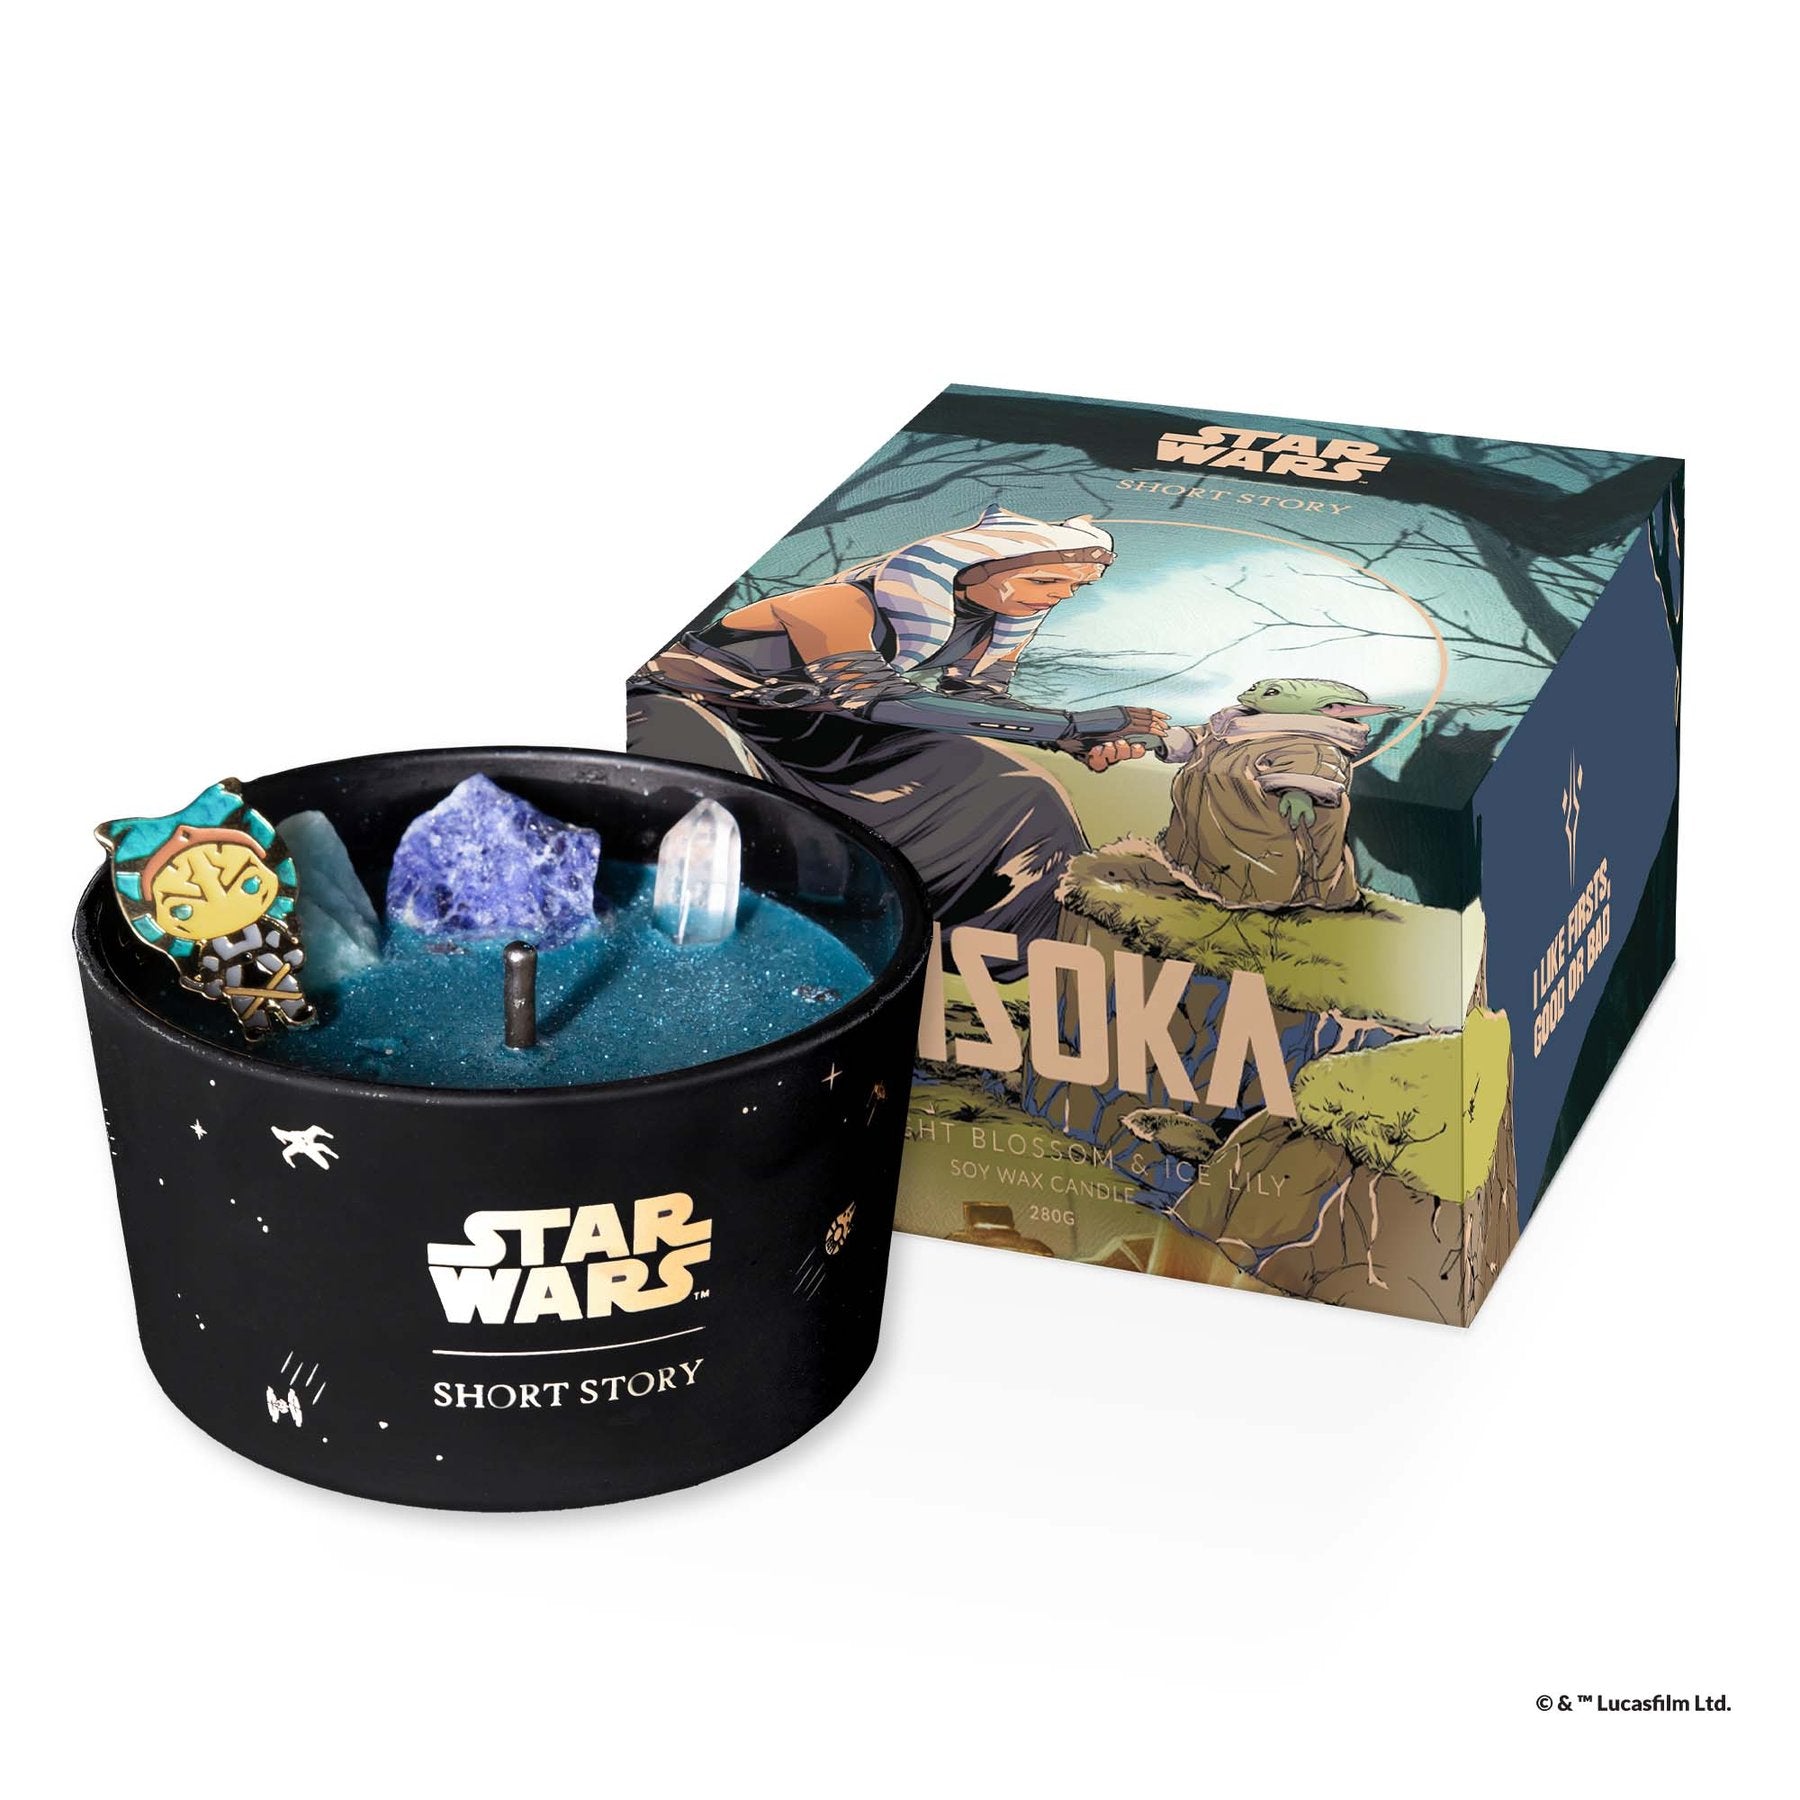 Star Wars ™ Candle Ahsoka™ - MIDNIGHT BLOSSOM & ICE LILY